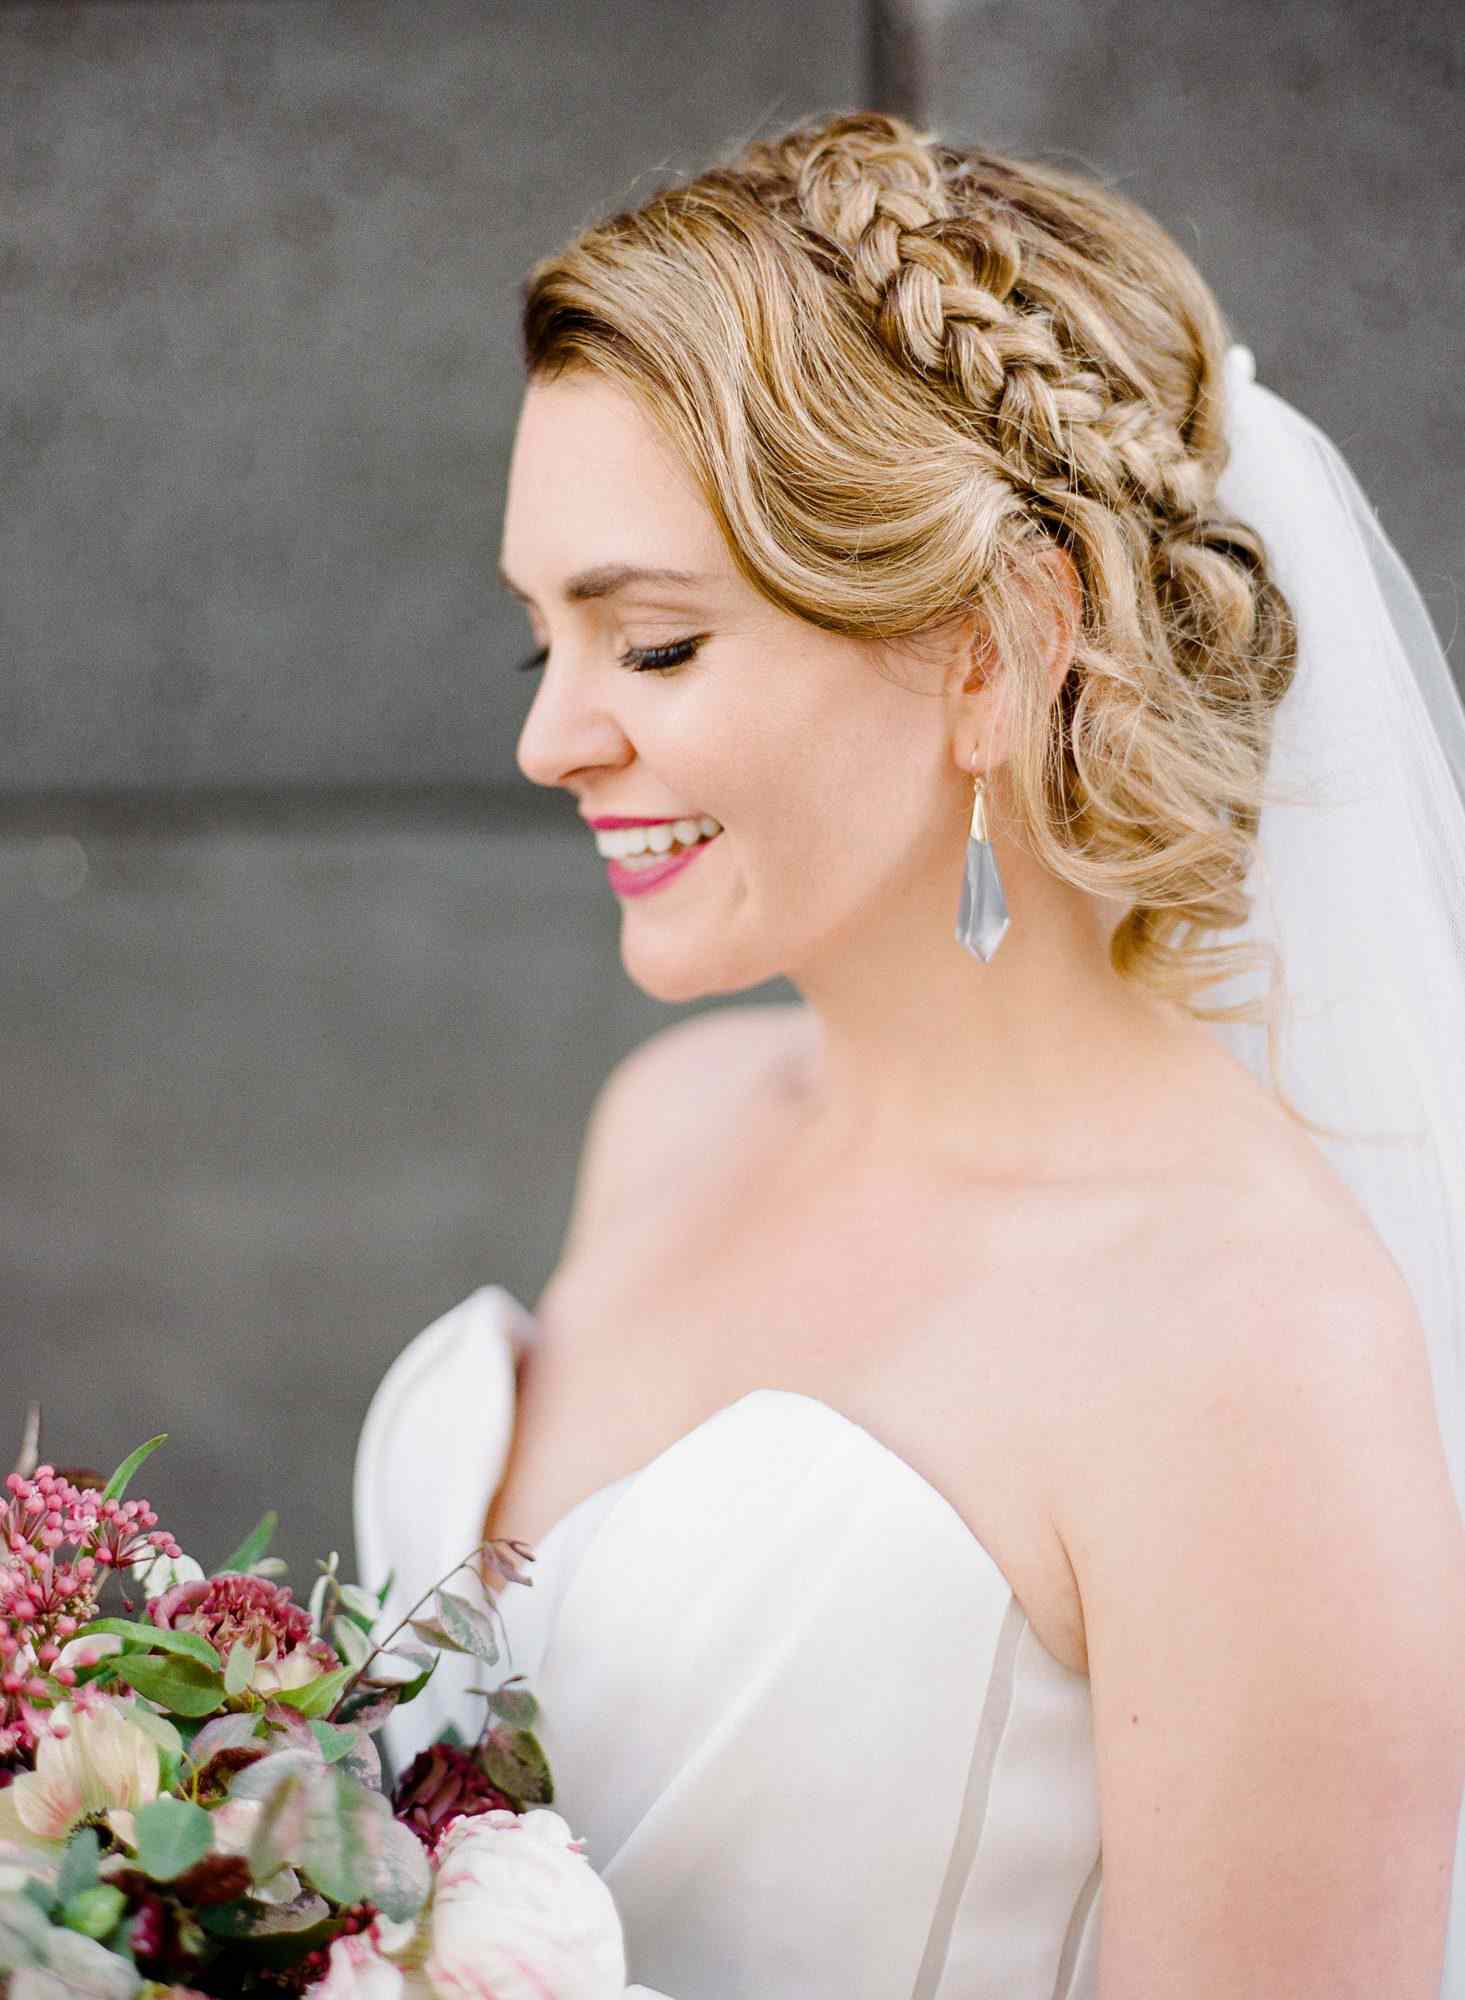 katie andre wedding bride hair updo braid